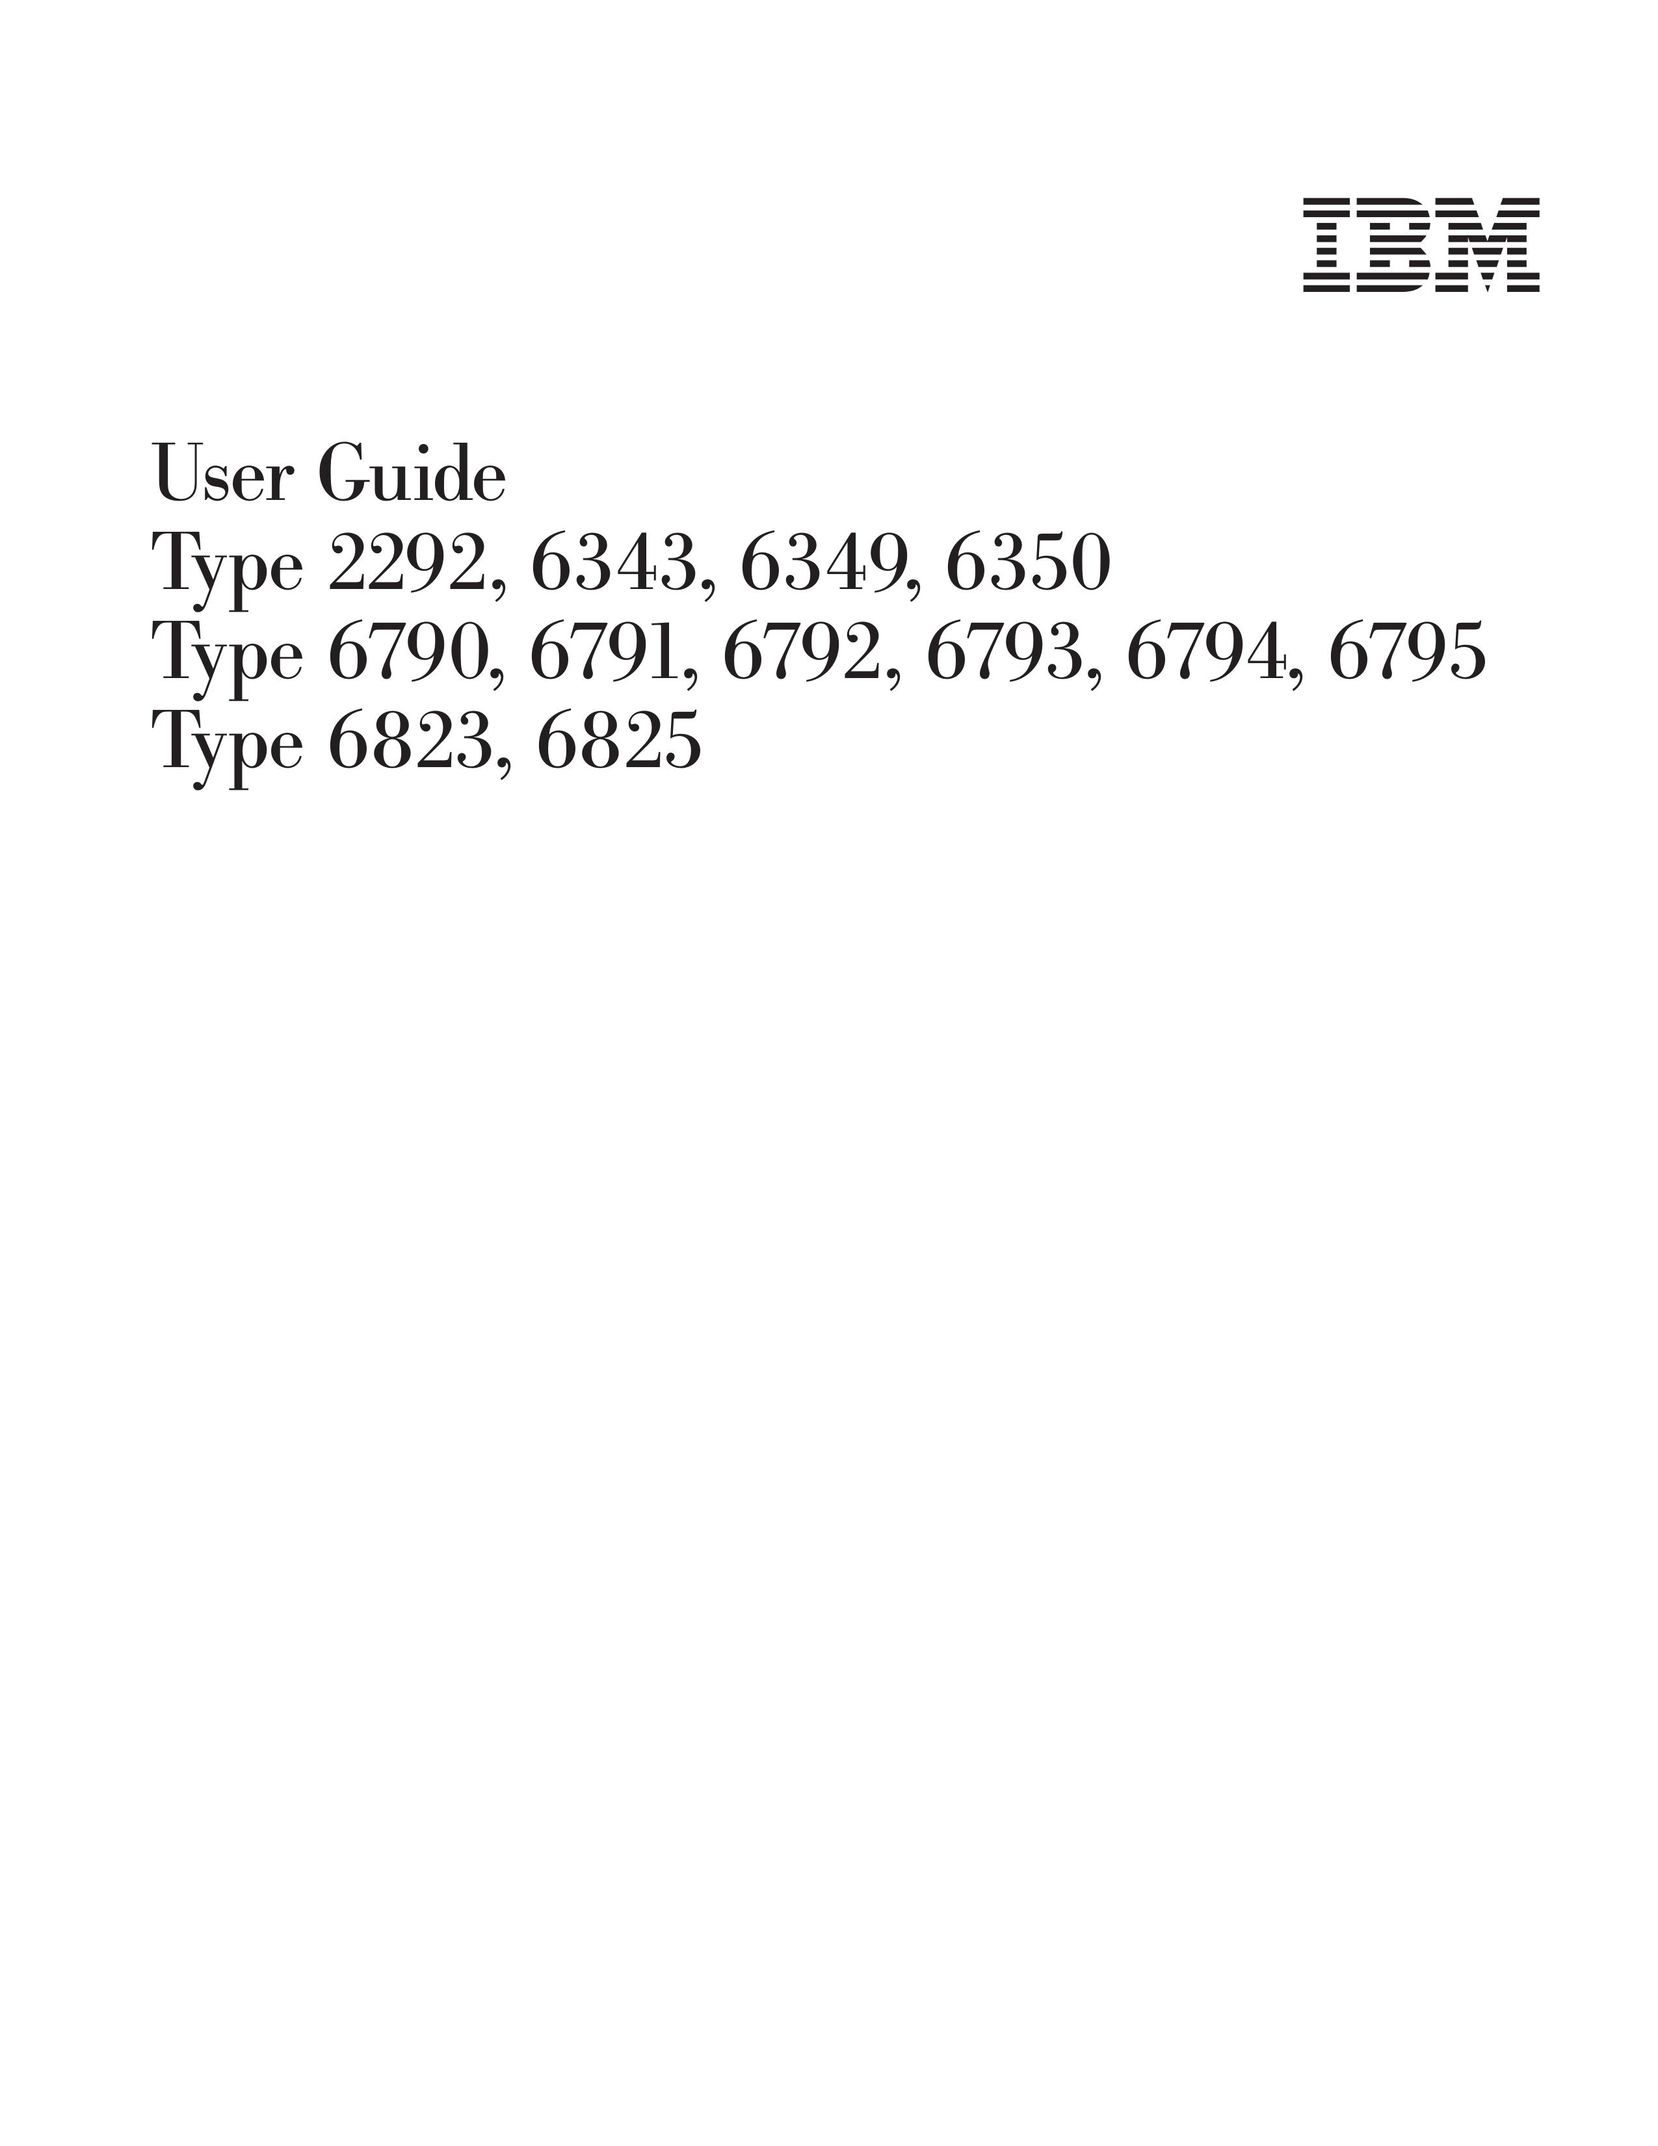 IBM Partner Pavilion 6792 Personal Computer User Manual